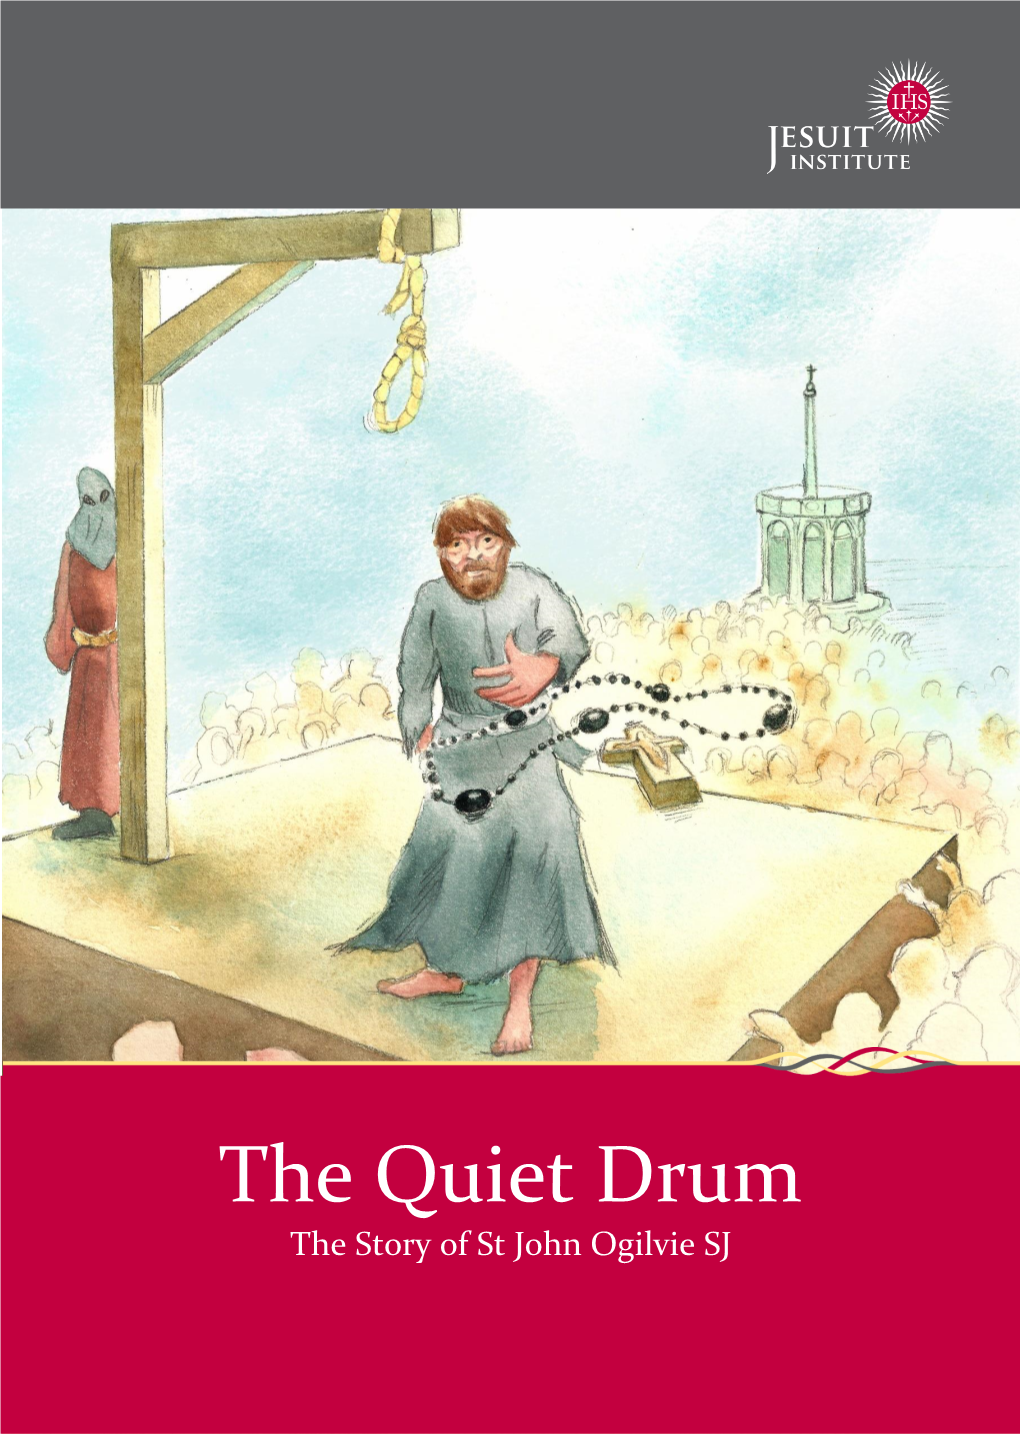 The Quiet Drum the Story of St John Ogilvie SJ